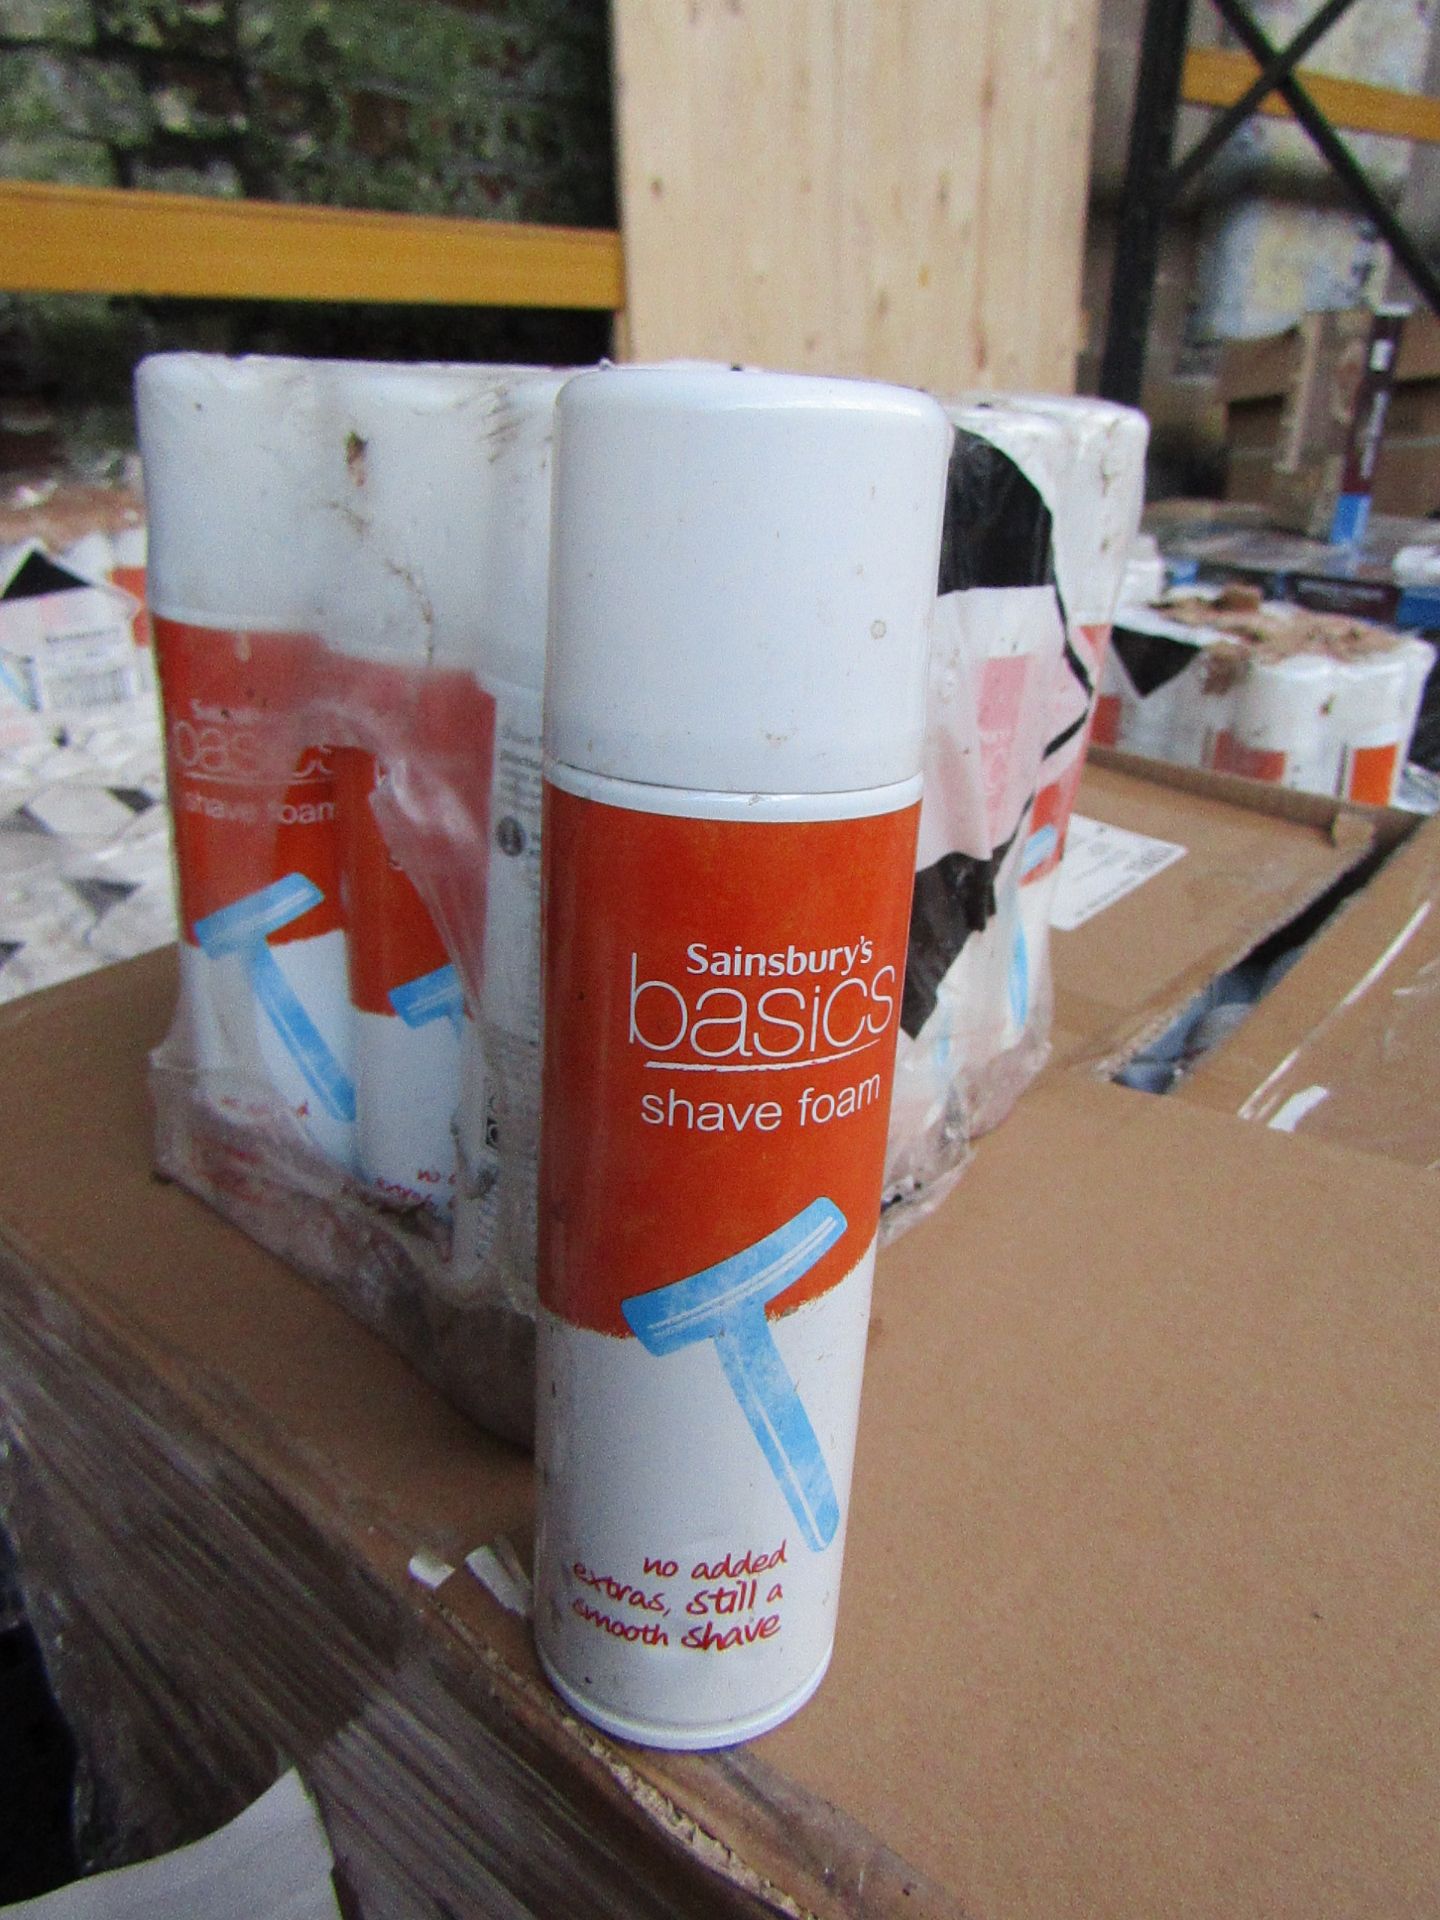 12x 250ml Sainsbury's Basics shaving foam, all new.